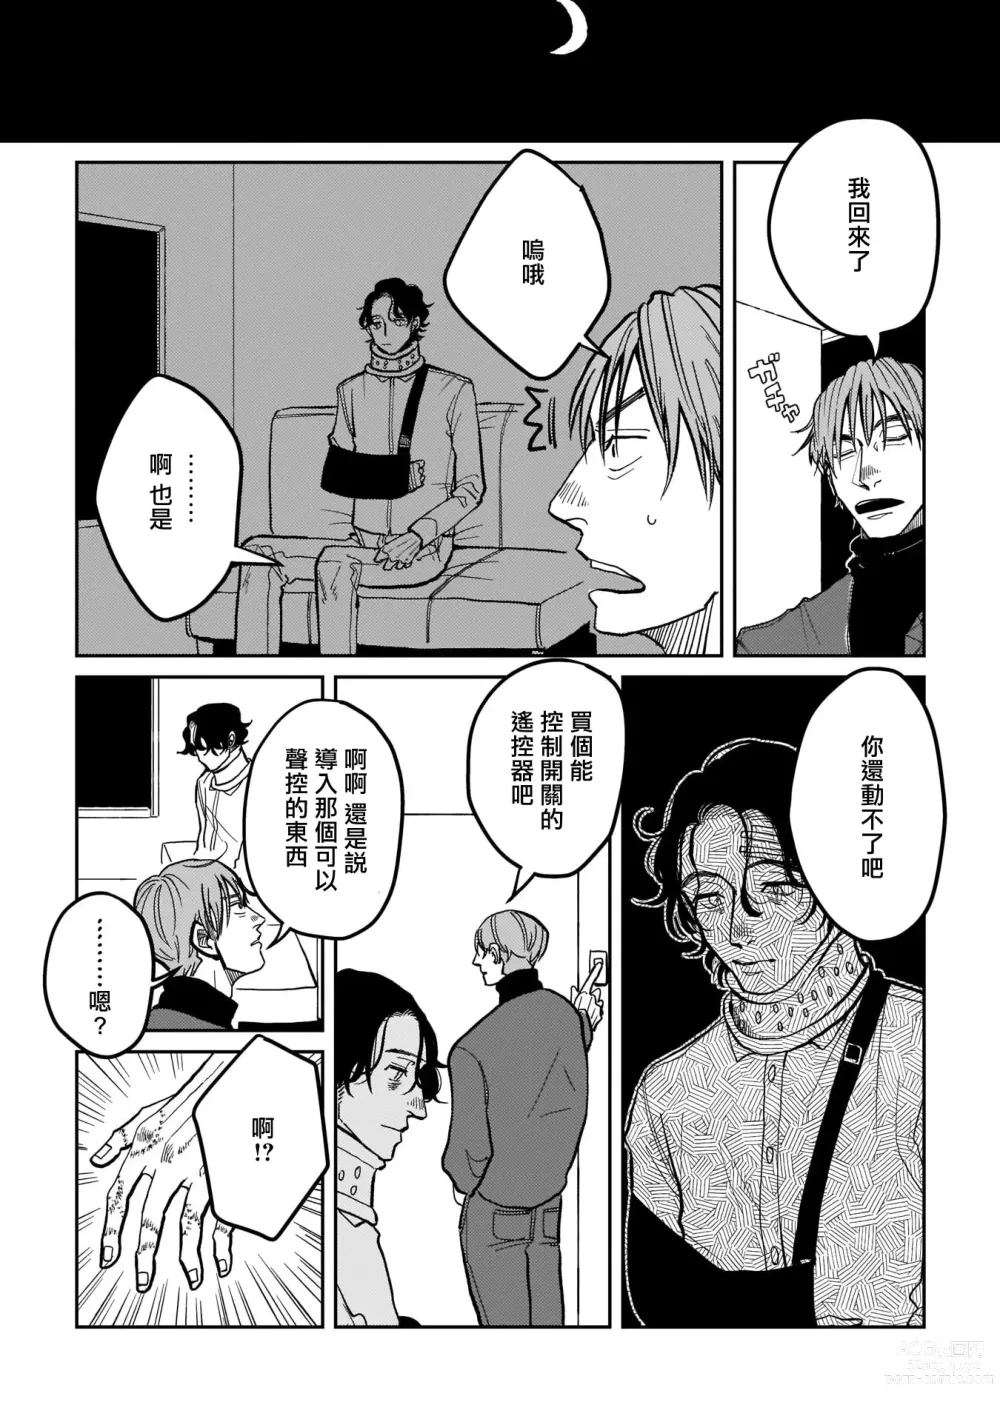 Page 21 of manga 无论疾病、还是健康 #4-6 + P站番外插图 + 番外合集1-7